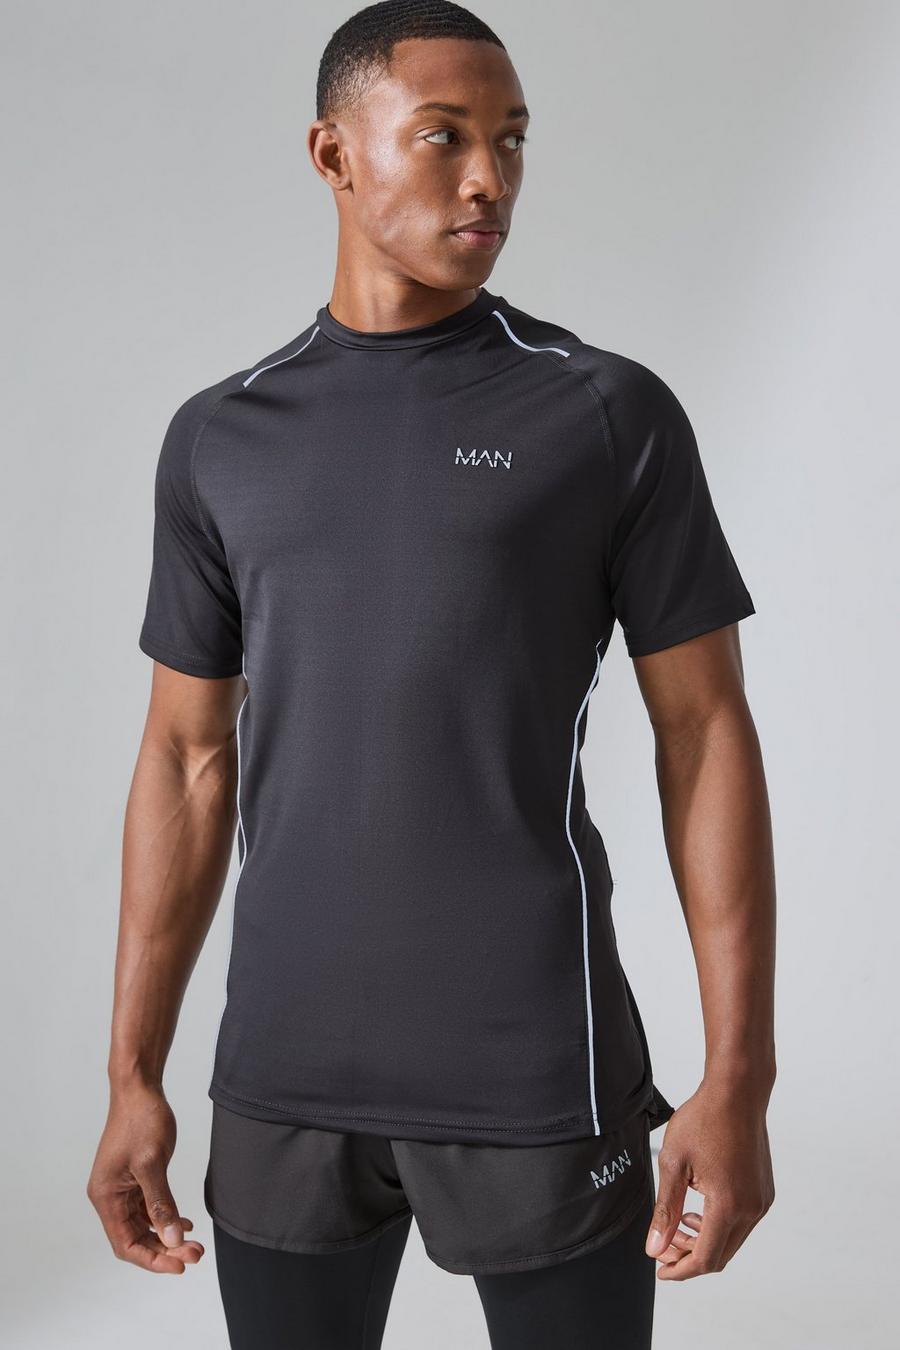 Camiseta MAN Active de correr ajustada al músculo, Black image number 1